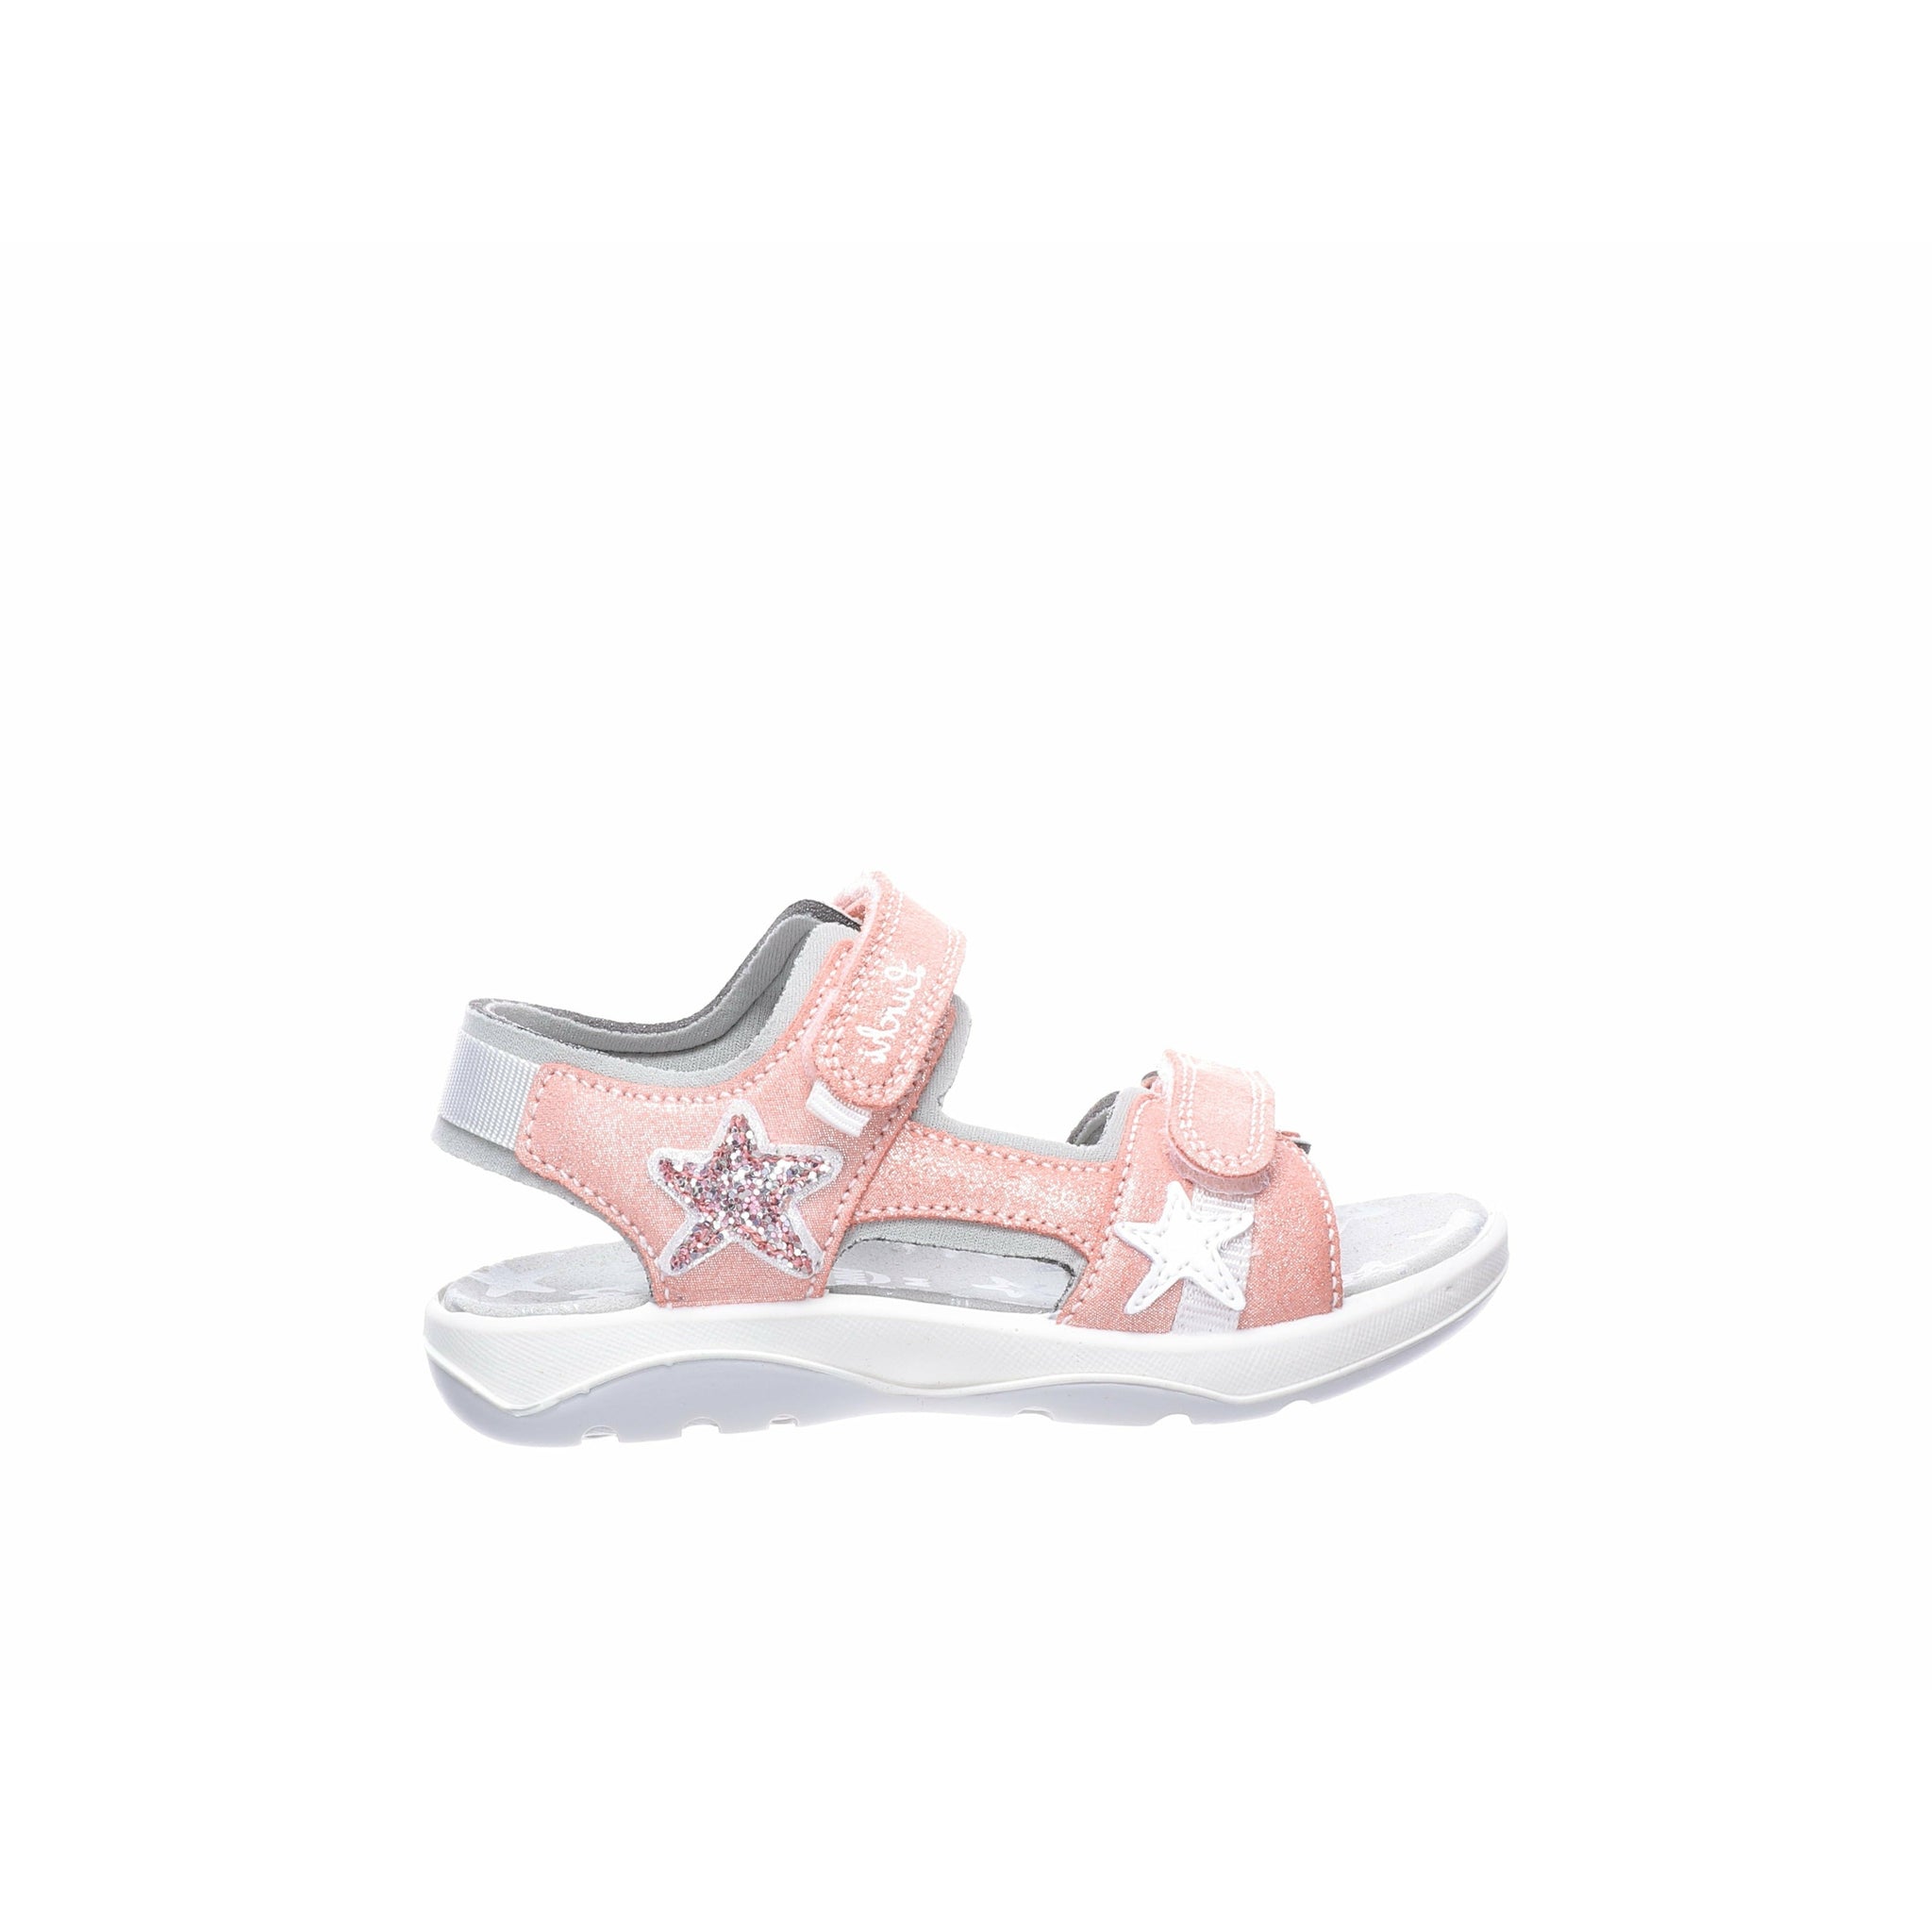 Lurchi Fia - Girls Velcro Sandal in Pink